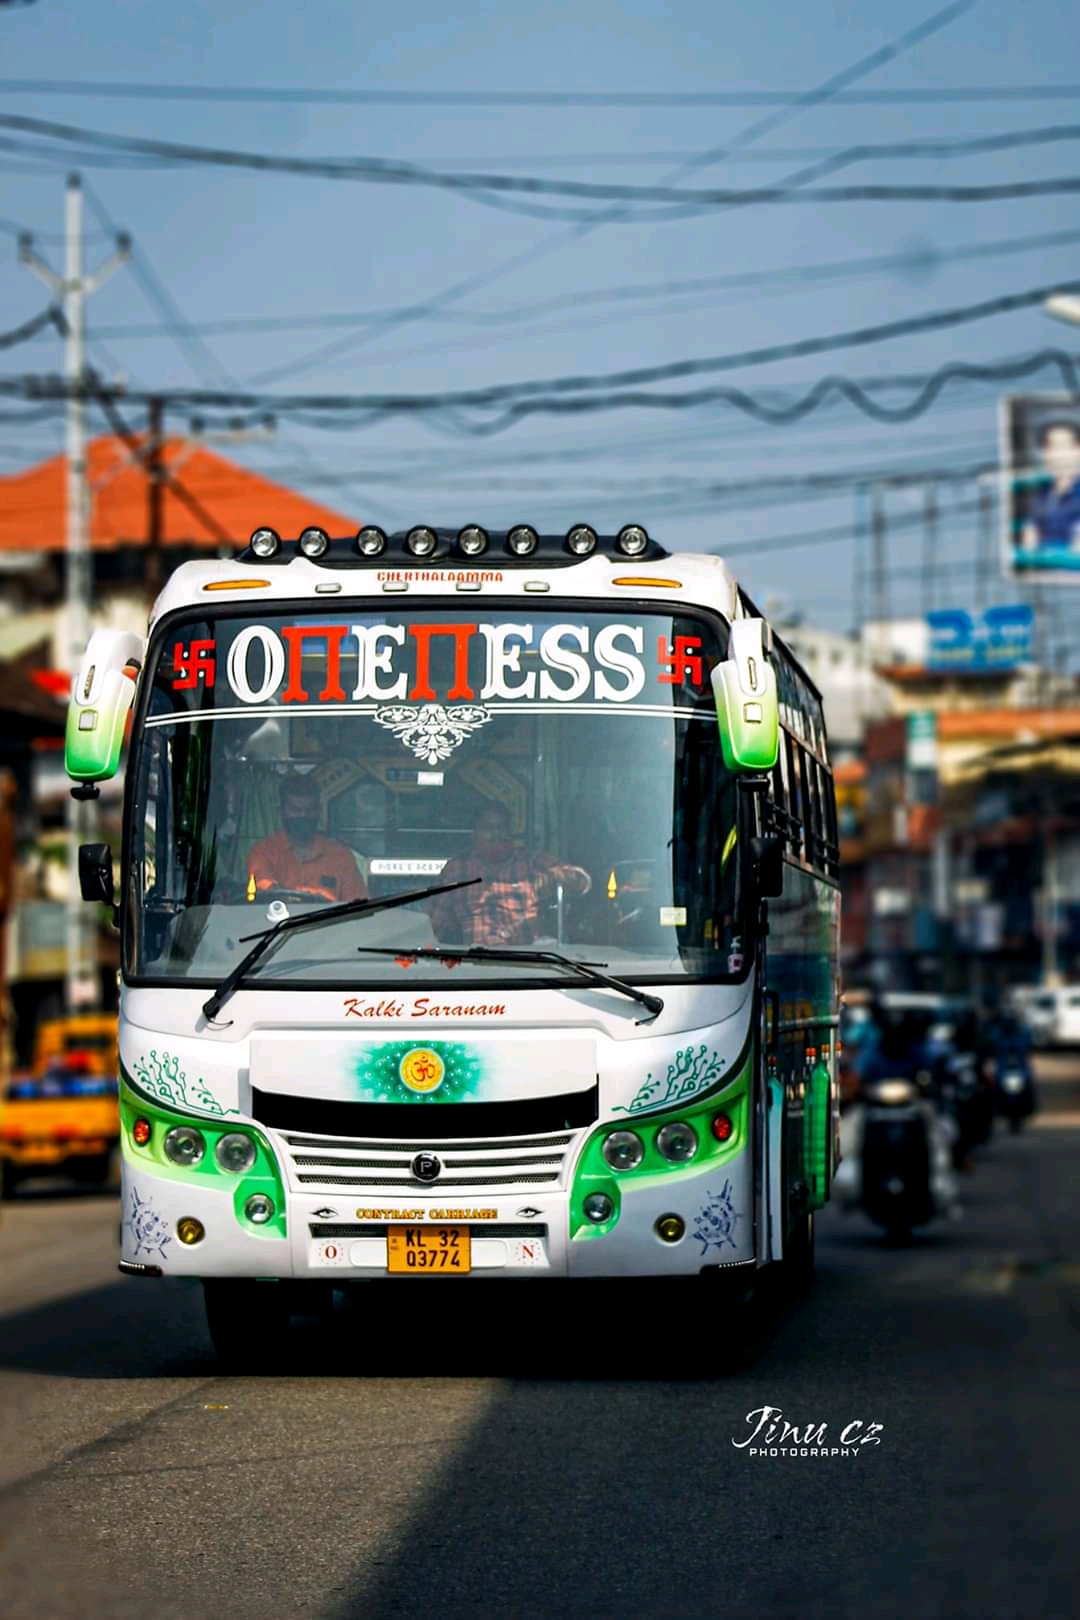 kerala tour bus images